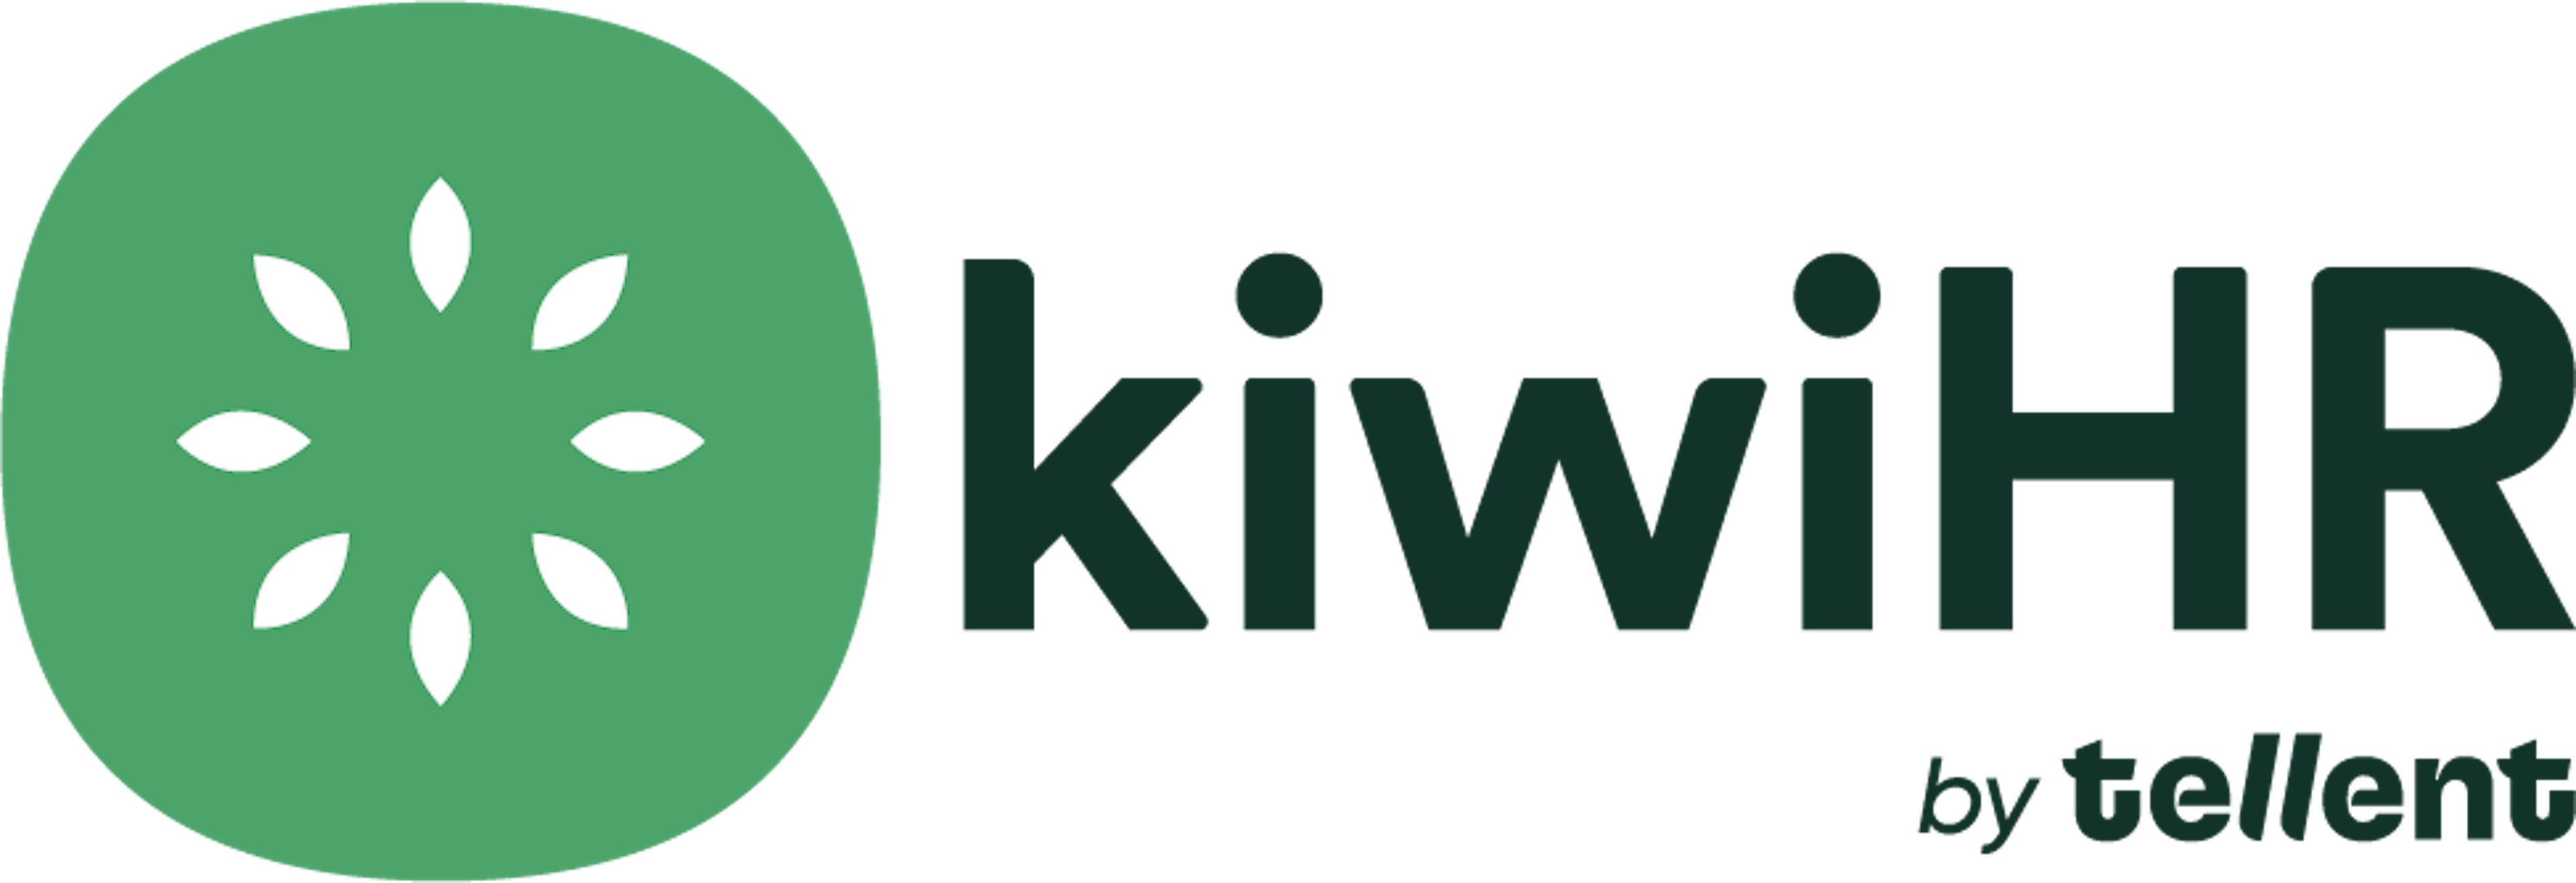 kiwiHR Logo